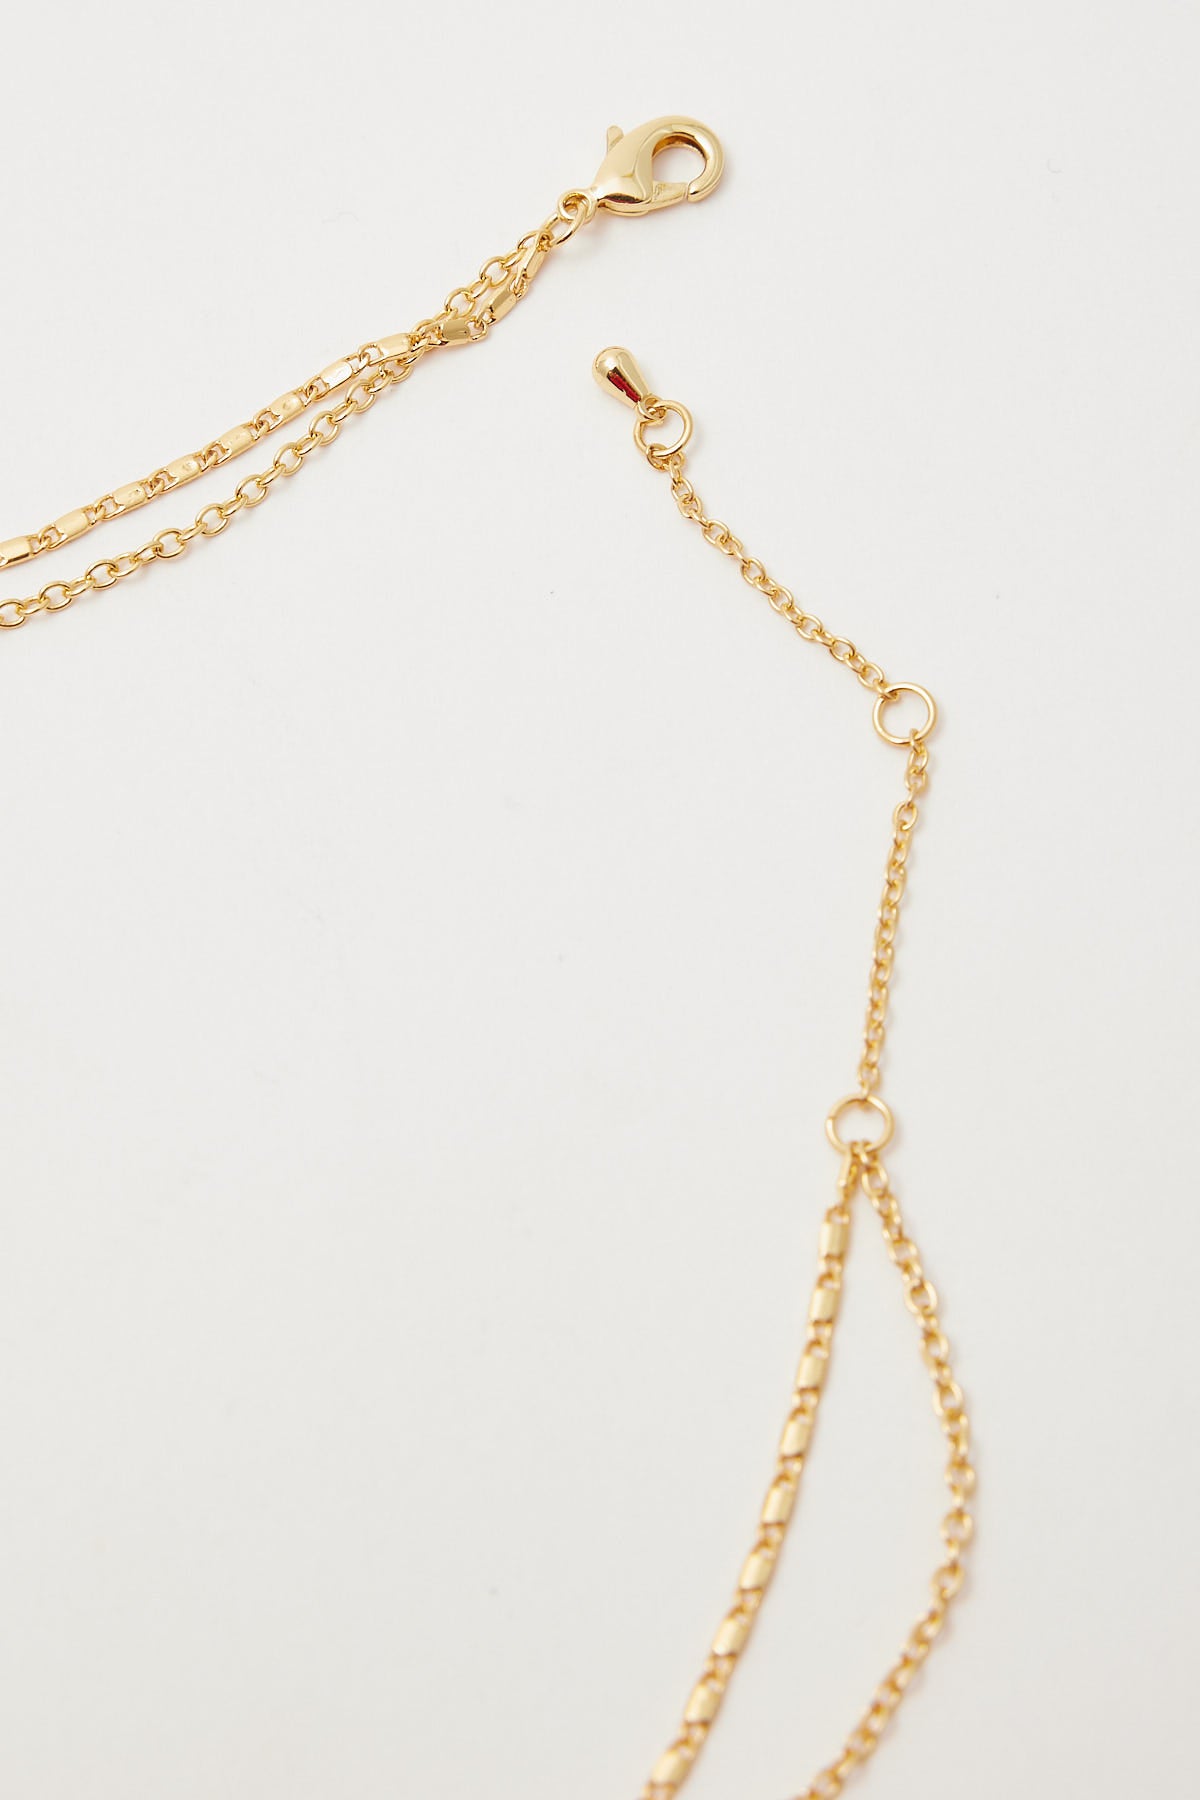 Perfect Stranger Nebula Pendant Necklace 18K Gold Plated